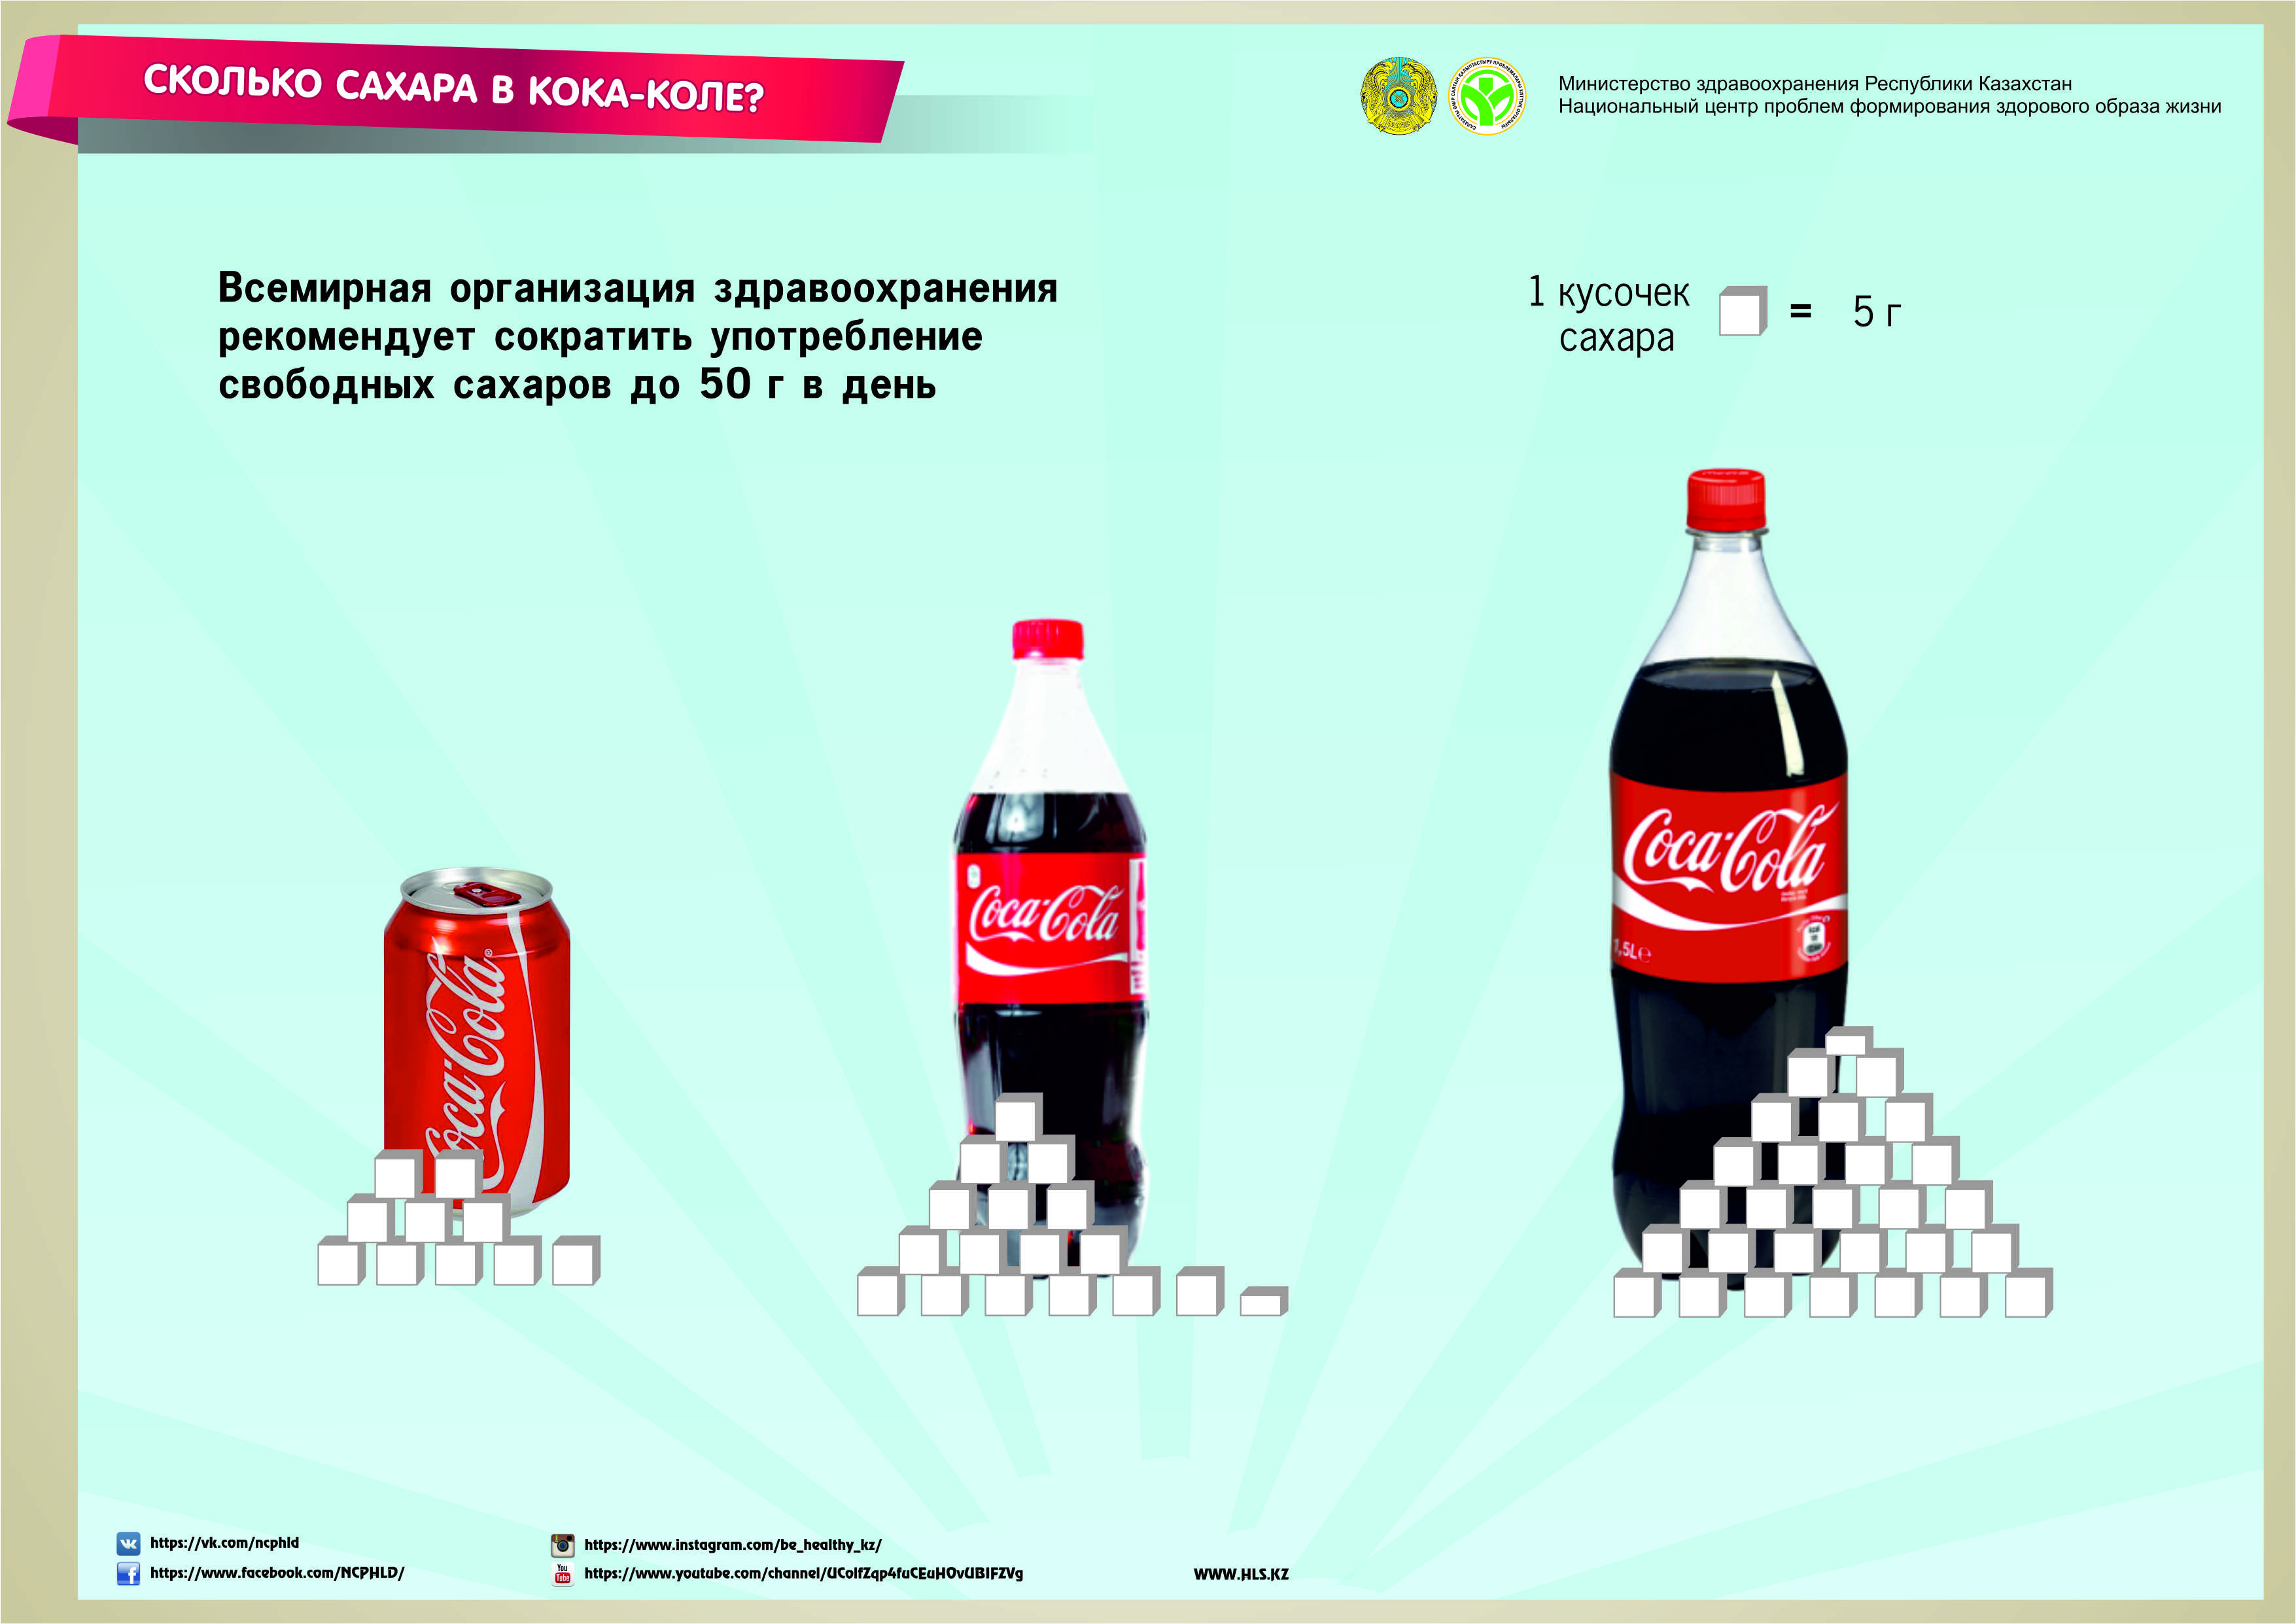 Сколько сахара в коле 1 литр. Сколько сахара в 1 литре Кока колы. Содержание сахара в Кока Коле 0.5. Сколько сахара содержится в Кока Коле 1 литр. Кока кола содержание сахара 2 литра.